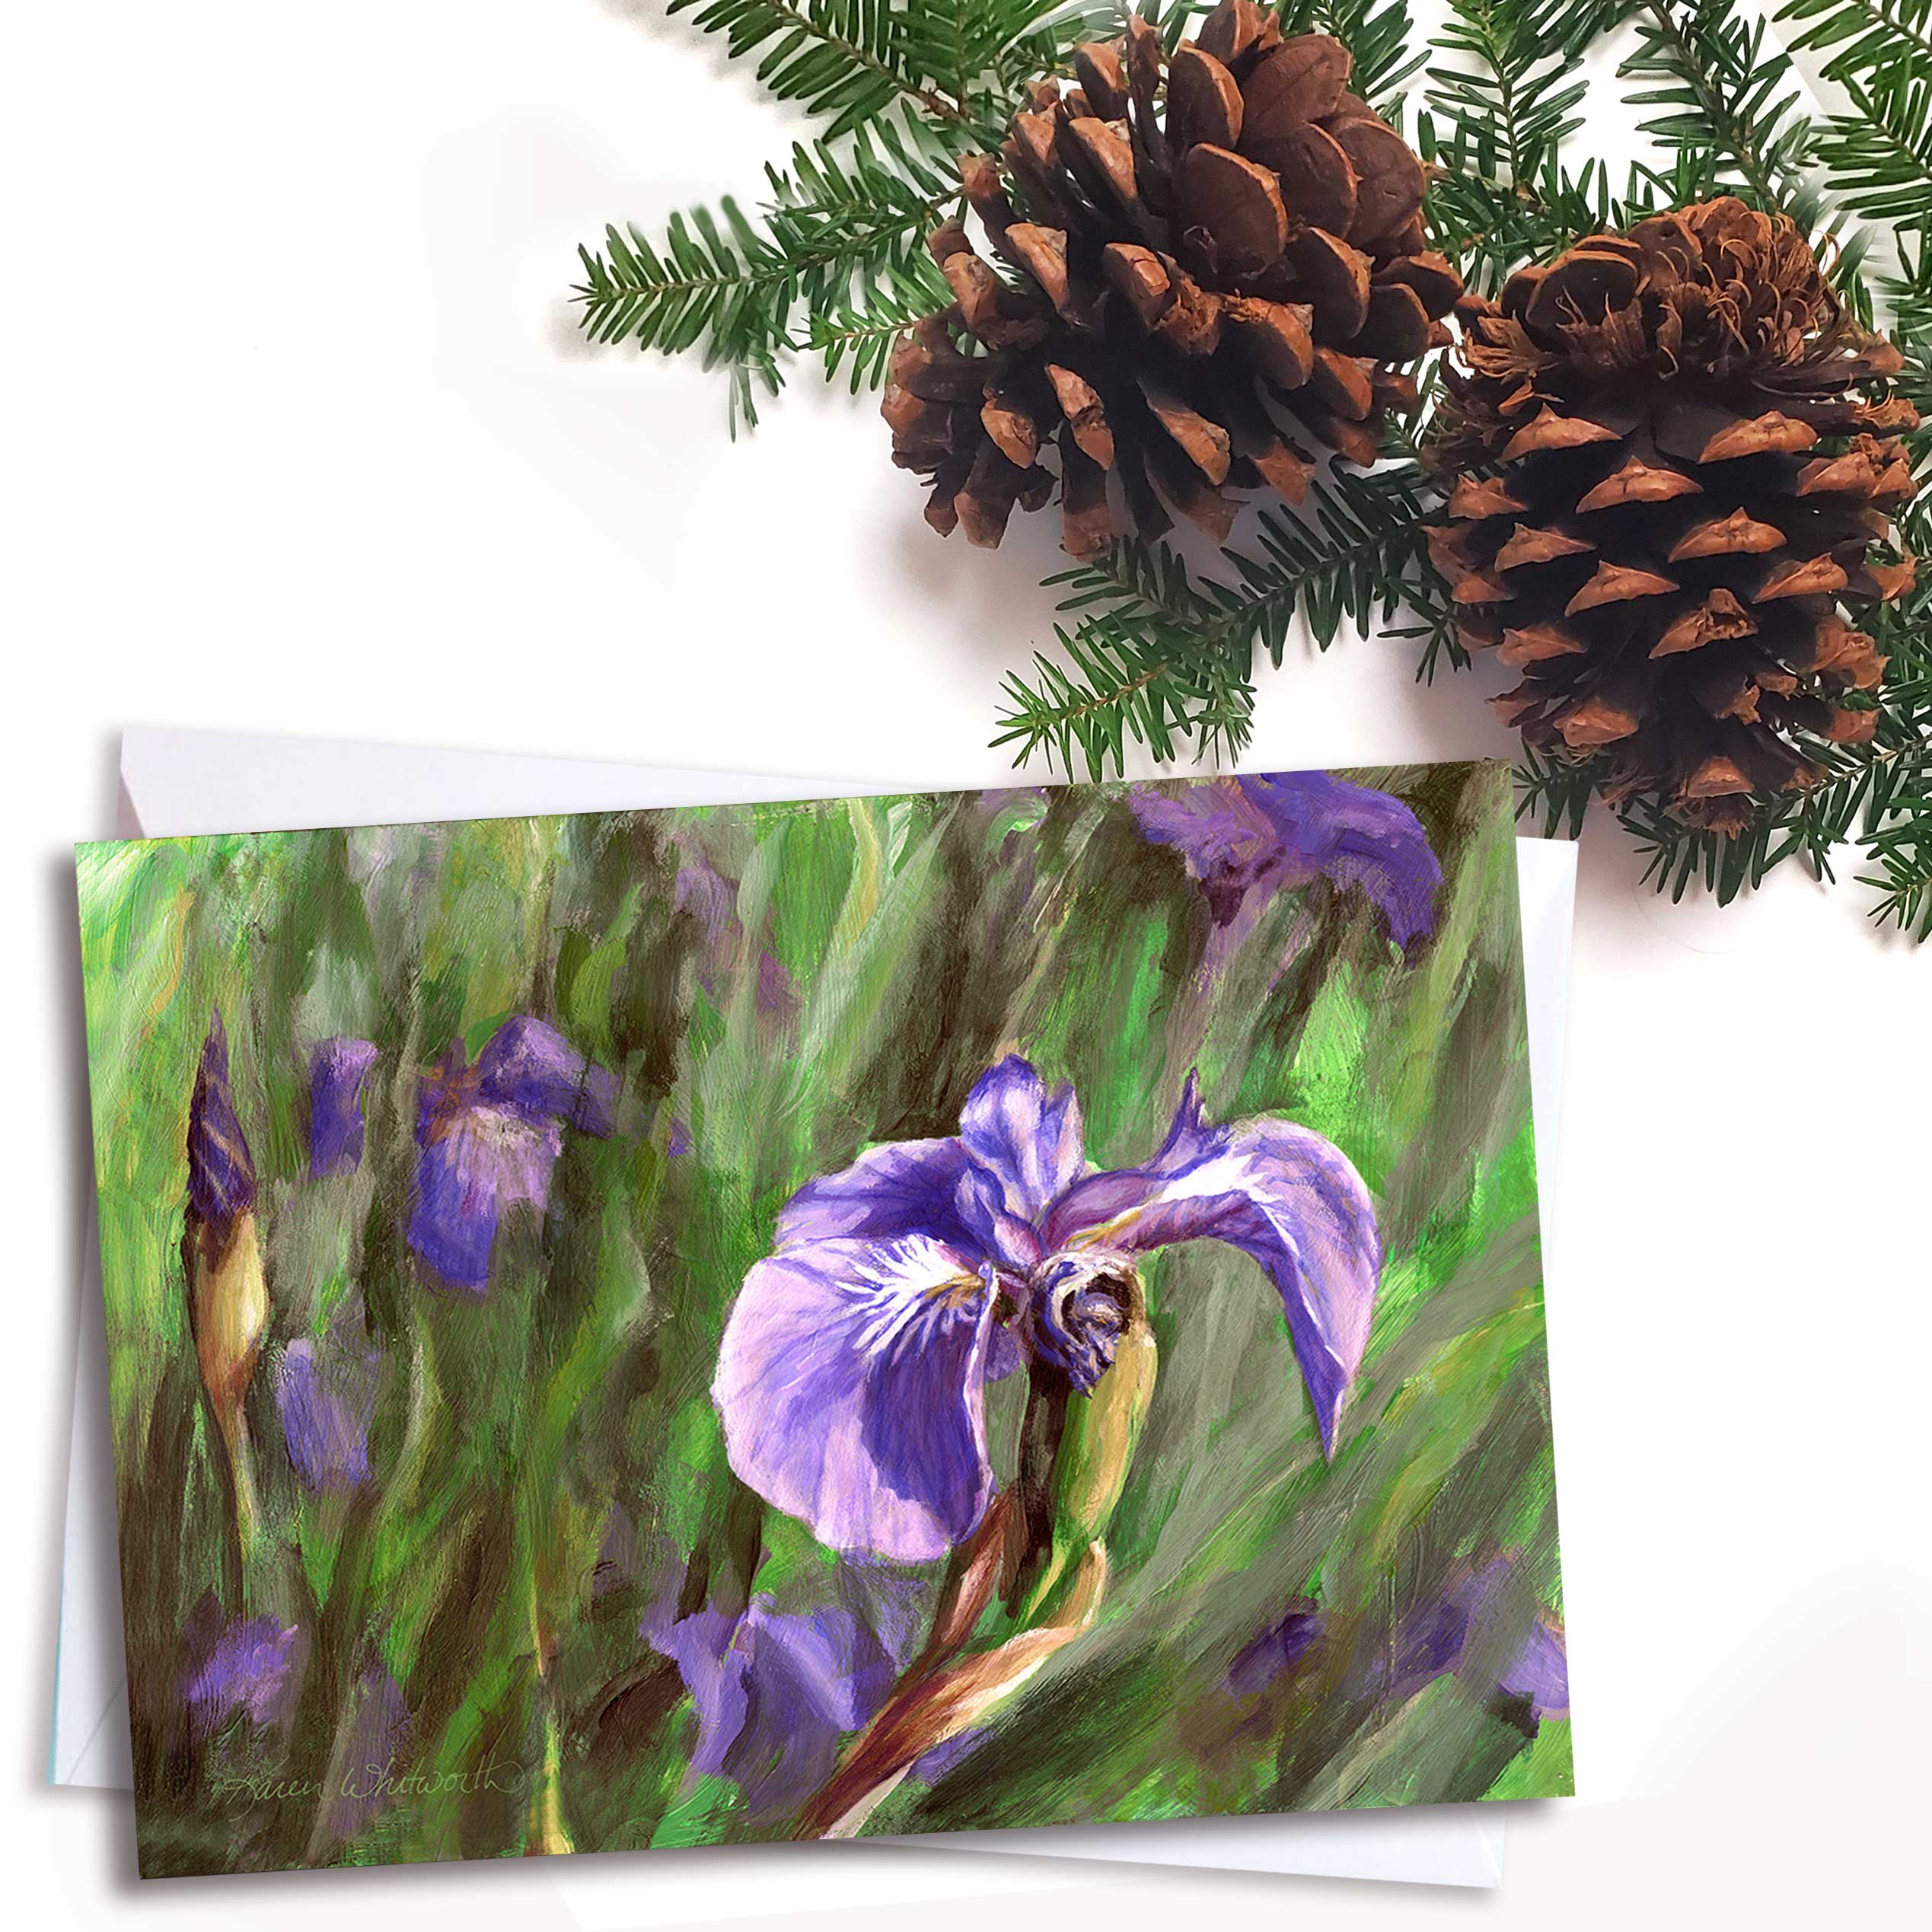 Iris Wildflower greeting card by Alaska artist Karen Whitworth